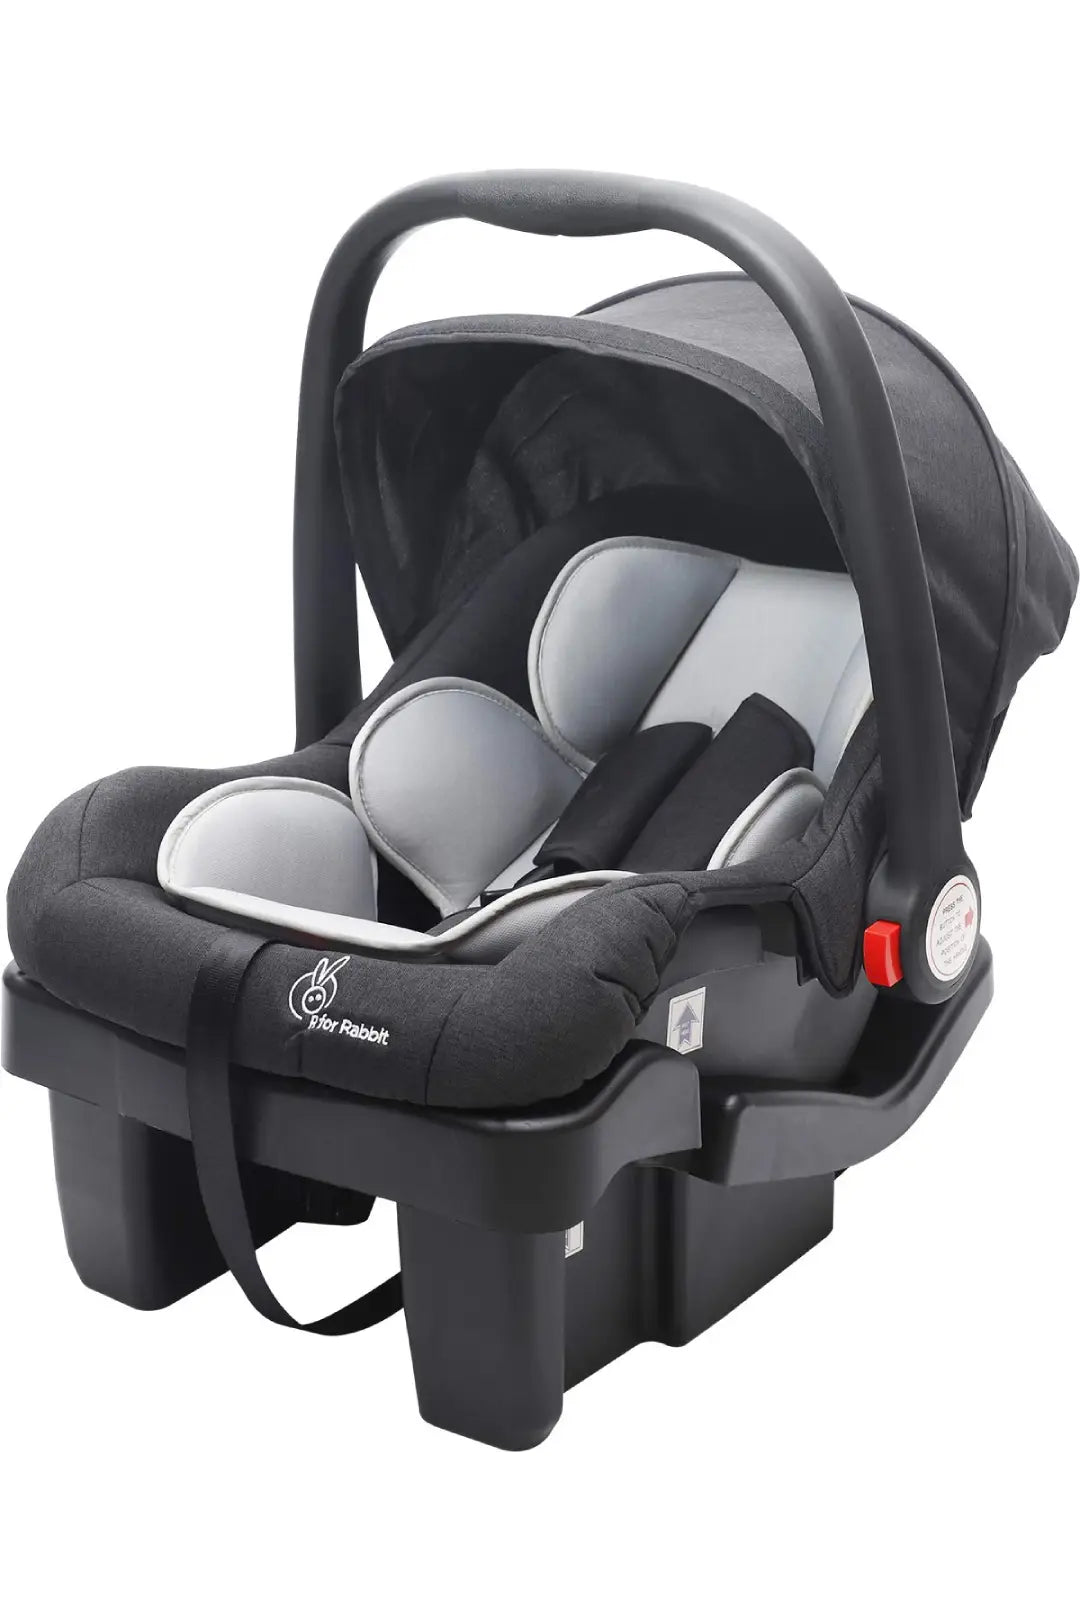 Picaboo 4 in 1 Multi Purpose Grand Baby Carry Cot Cum Car Seat